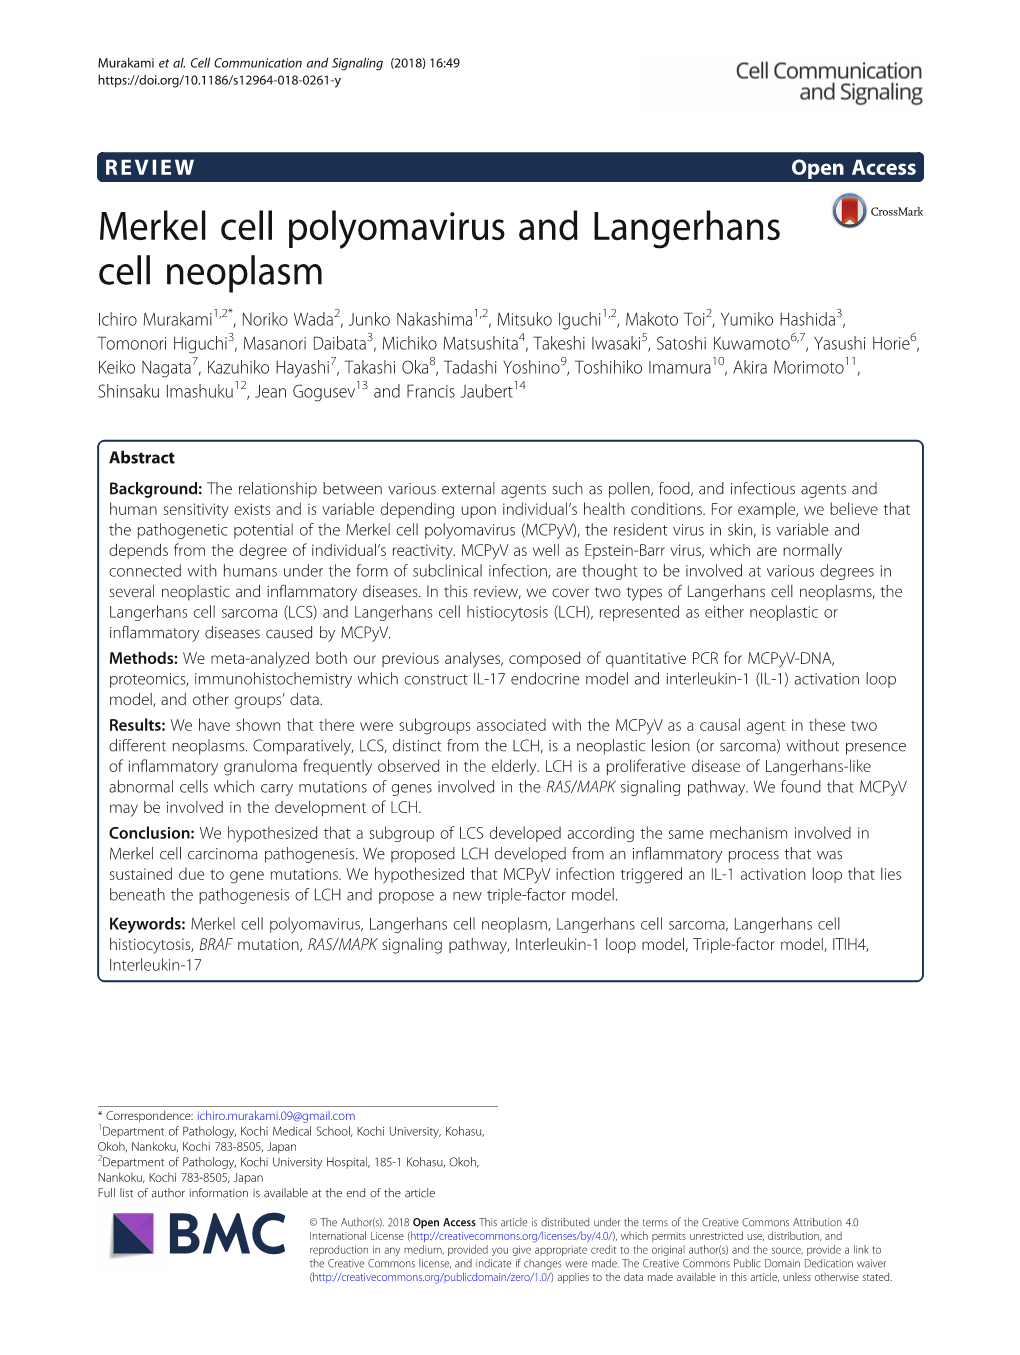 Merkel Cell Polyomavirus and Langerhans Cell Neoplasm